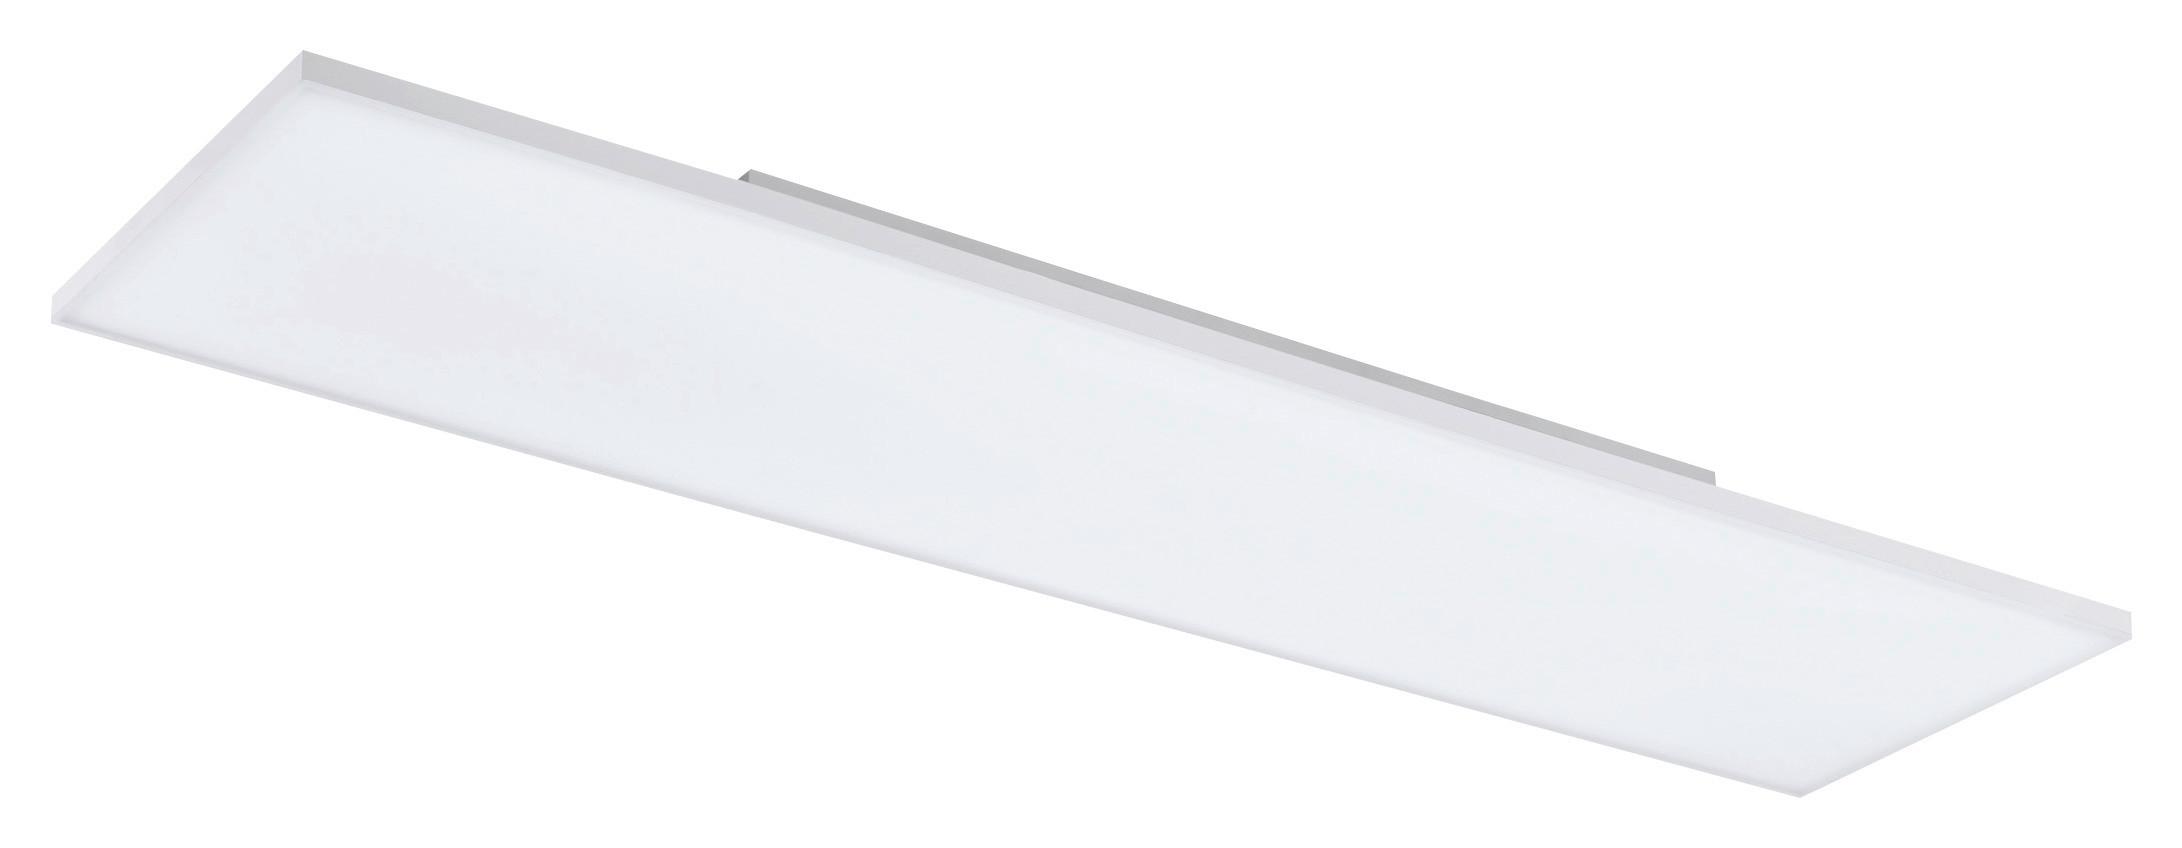 LED-Deckenleuchte Calemar L: 99,2 cm - Weiß, Basics, Kunststoff/Metall (99,2/24,2/6,9cm)